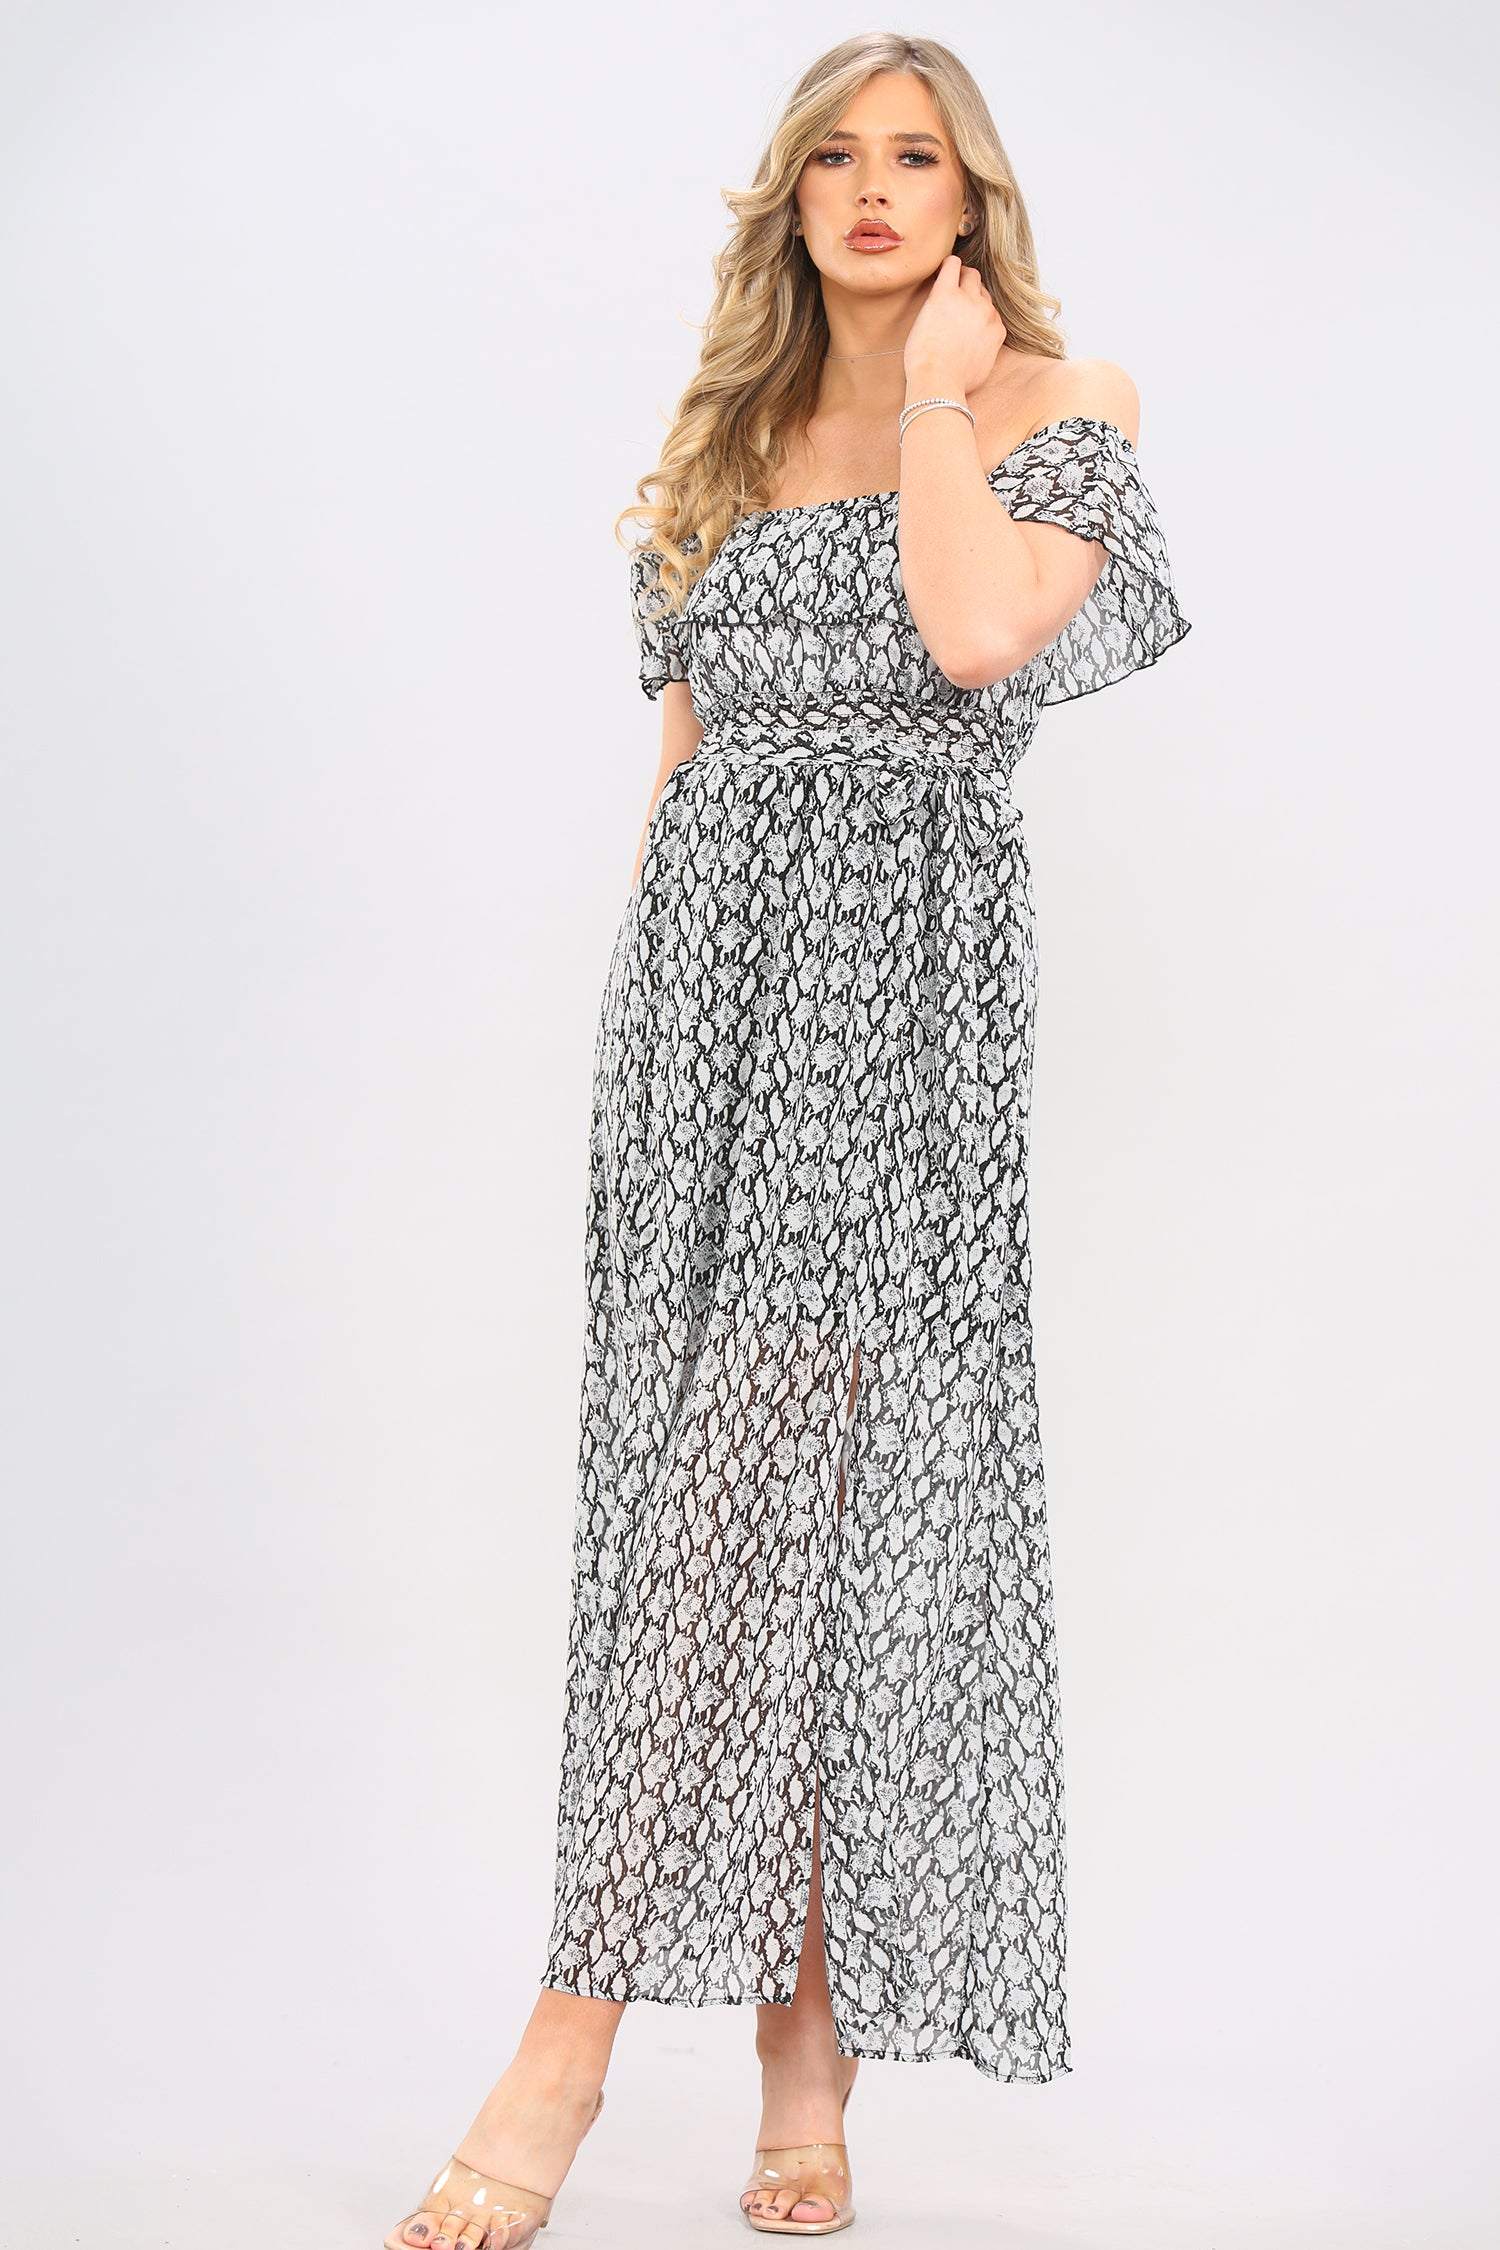 Love Sunshine Grey Snake Print Frill Bardot Maxi Dress LS-6012